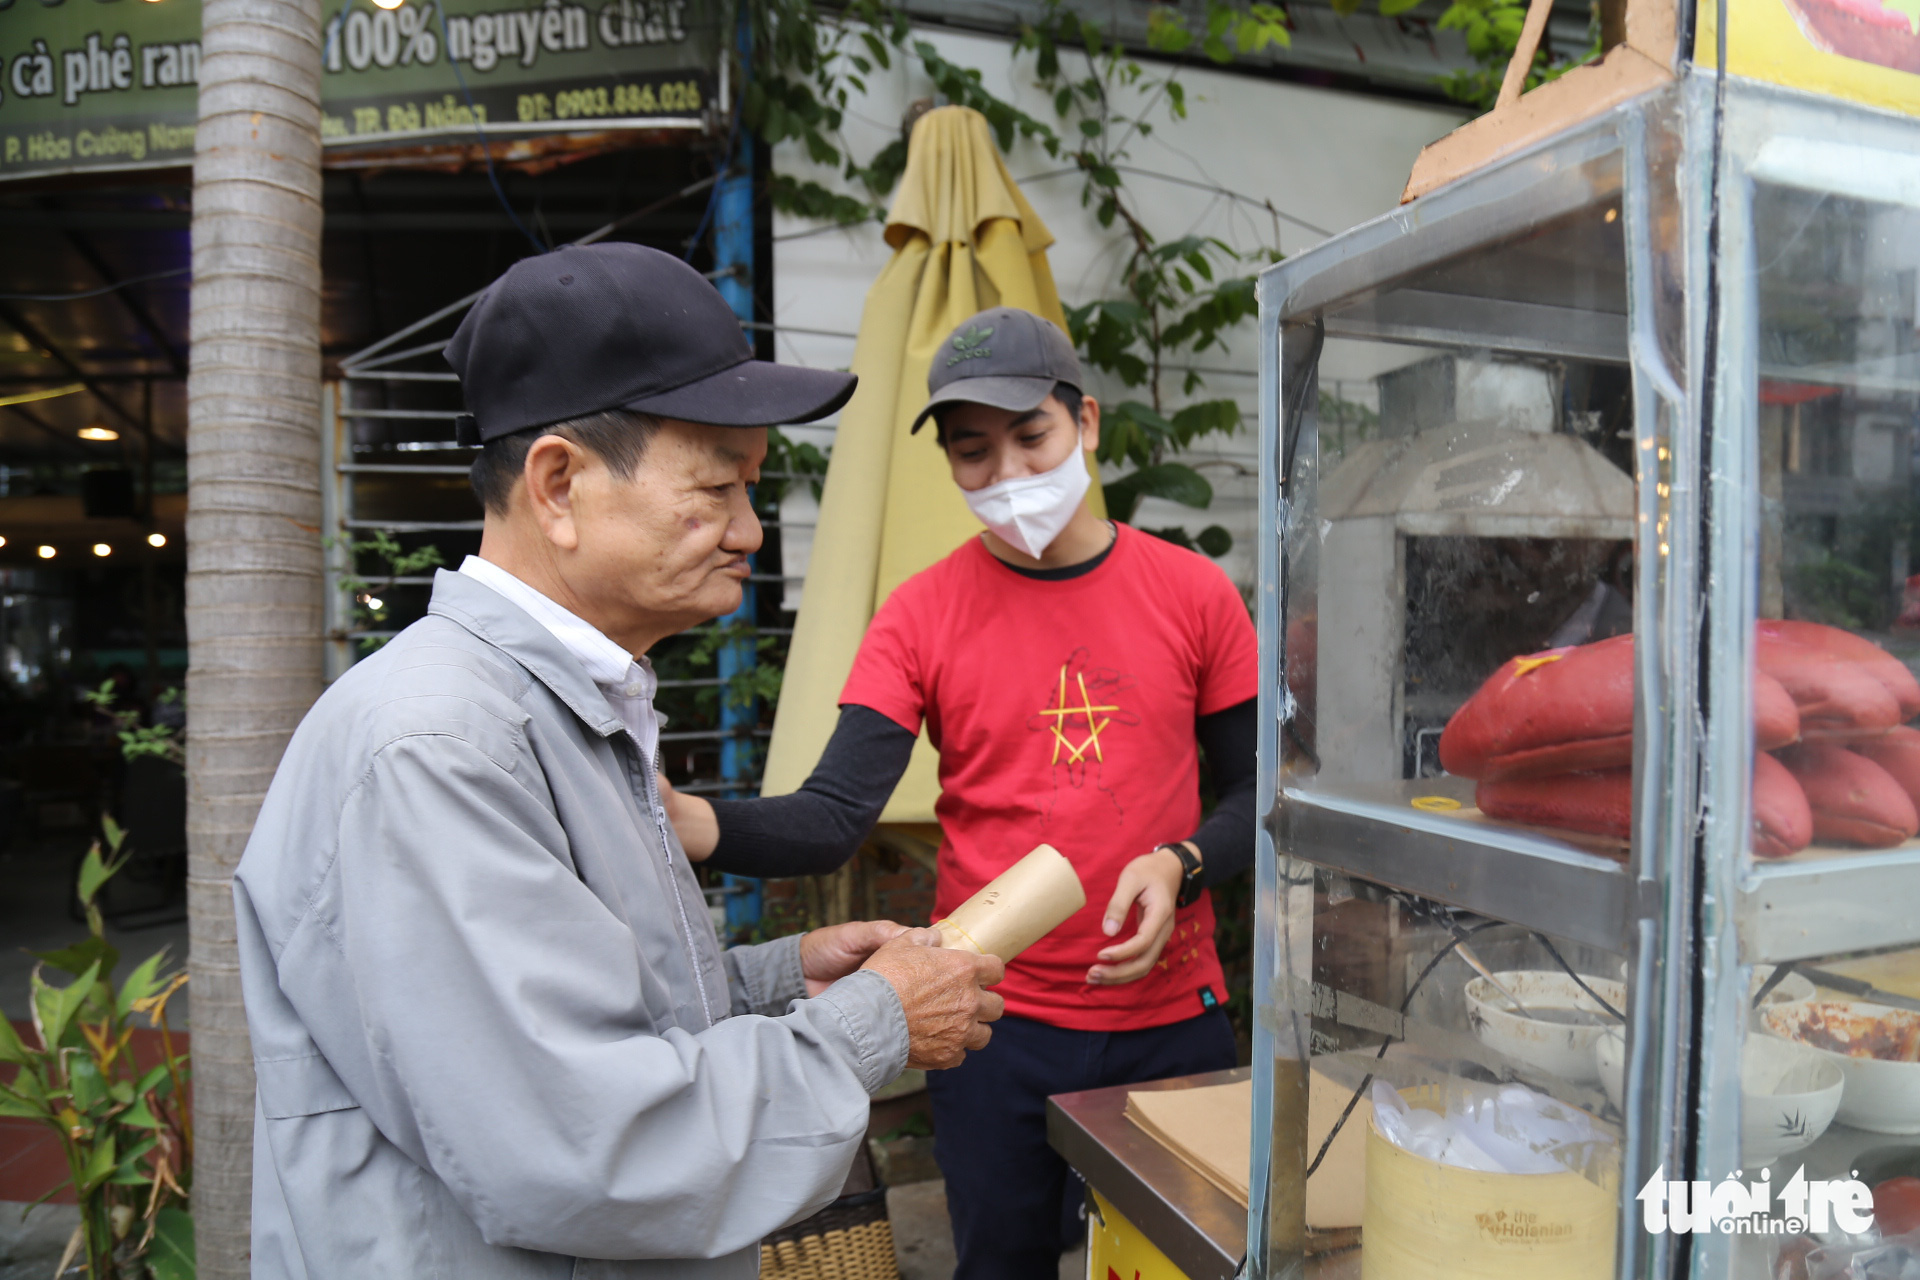 A man receives a free banh mi from Banh mi yeu nuoc in Da Nang City, Vietnam. Photo: Doan Nhan / Tuoi Tre